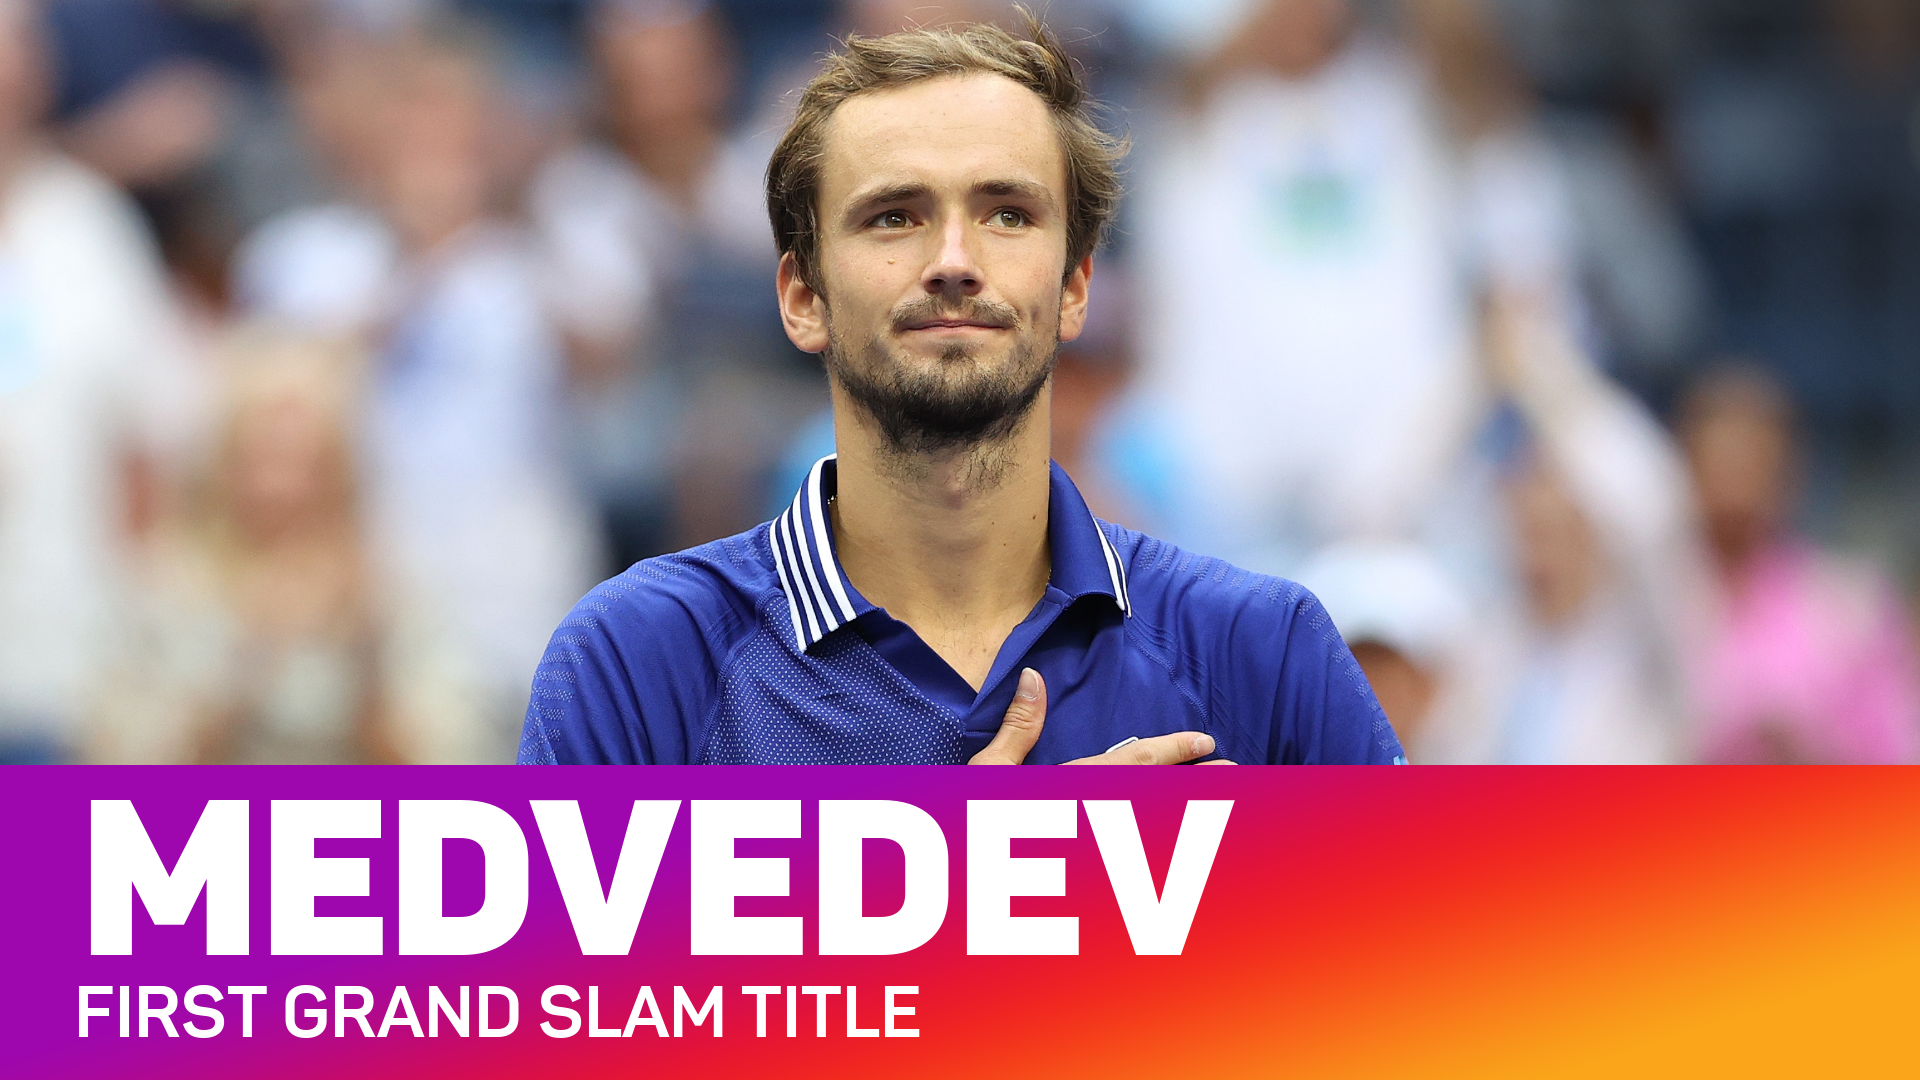 Daniil Medvedev has won his first major